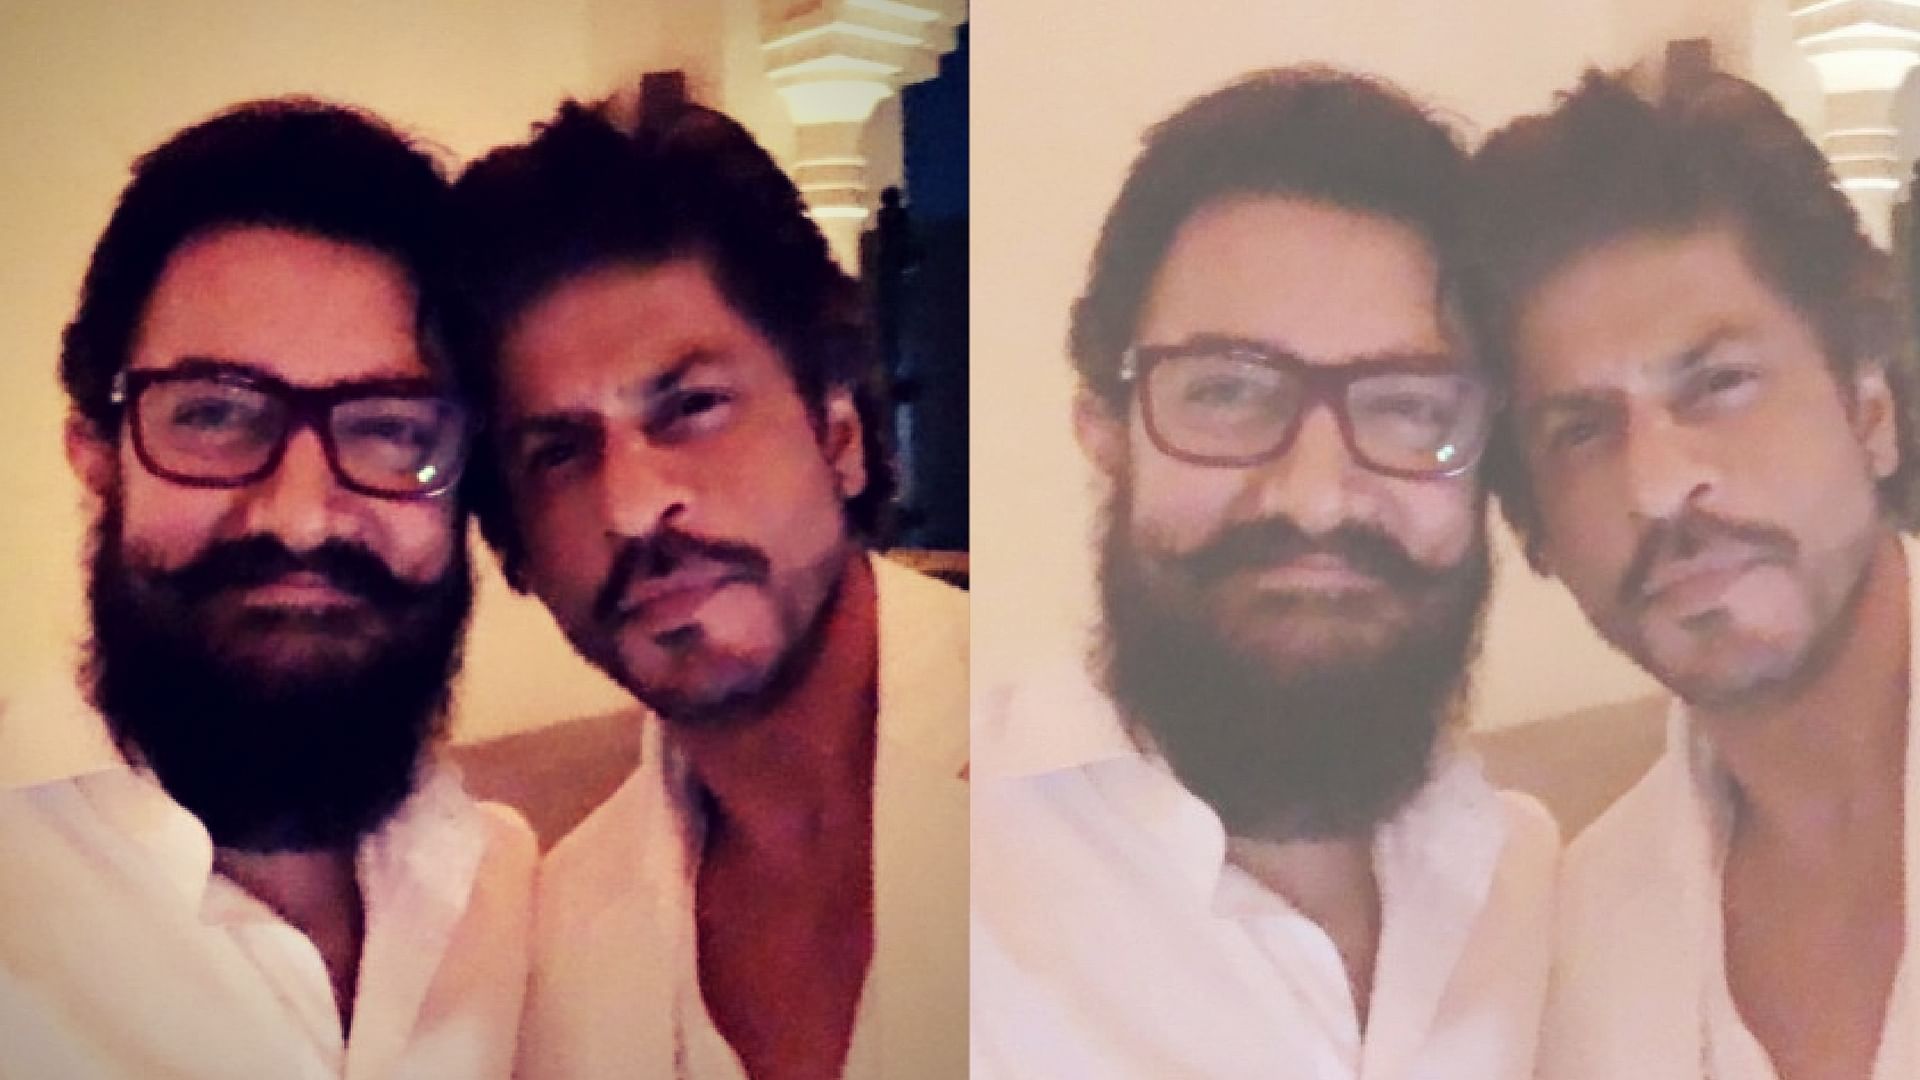  Aamir Khan and Shah Rukh Khan share a frame. (<a href="https://twitter.com/iamsrk/status/830139019640070145">Photo courtesy: Twitter/ @iamsrk</a>)